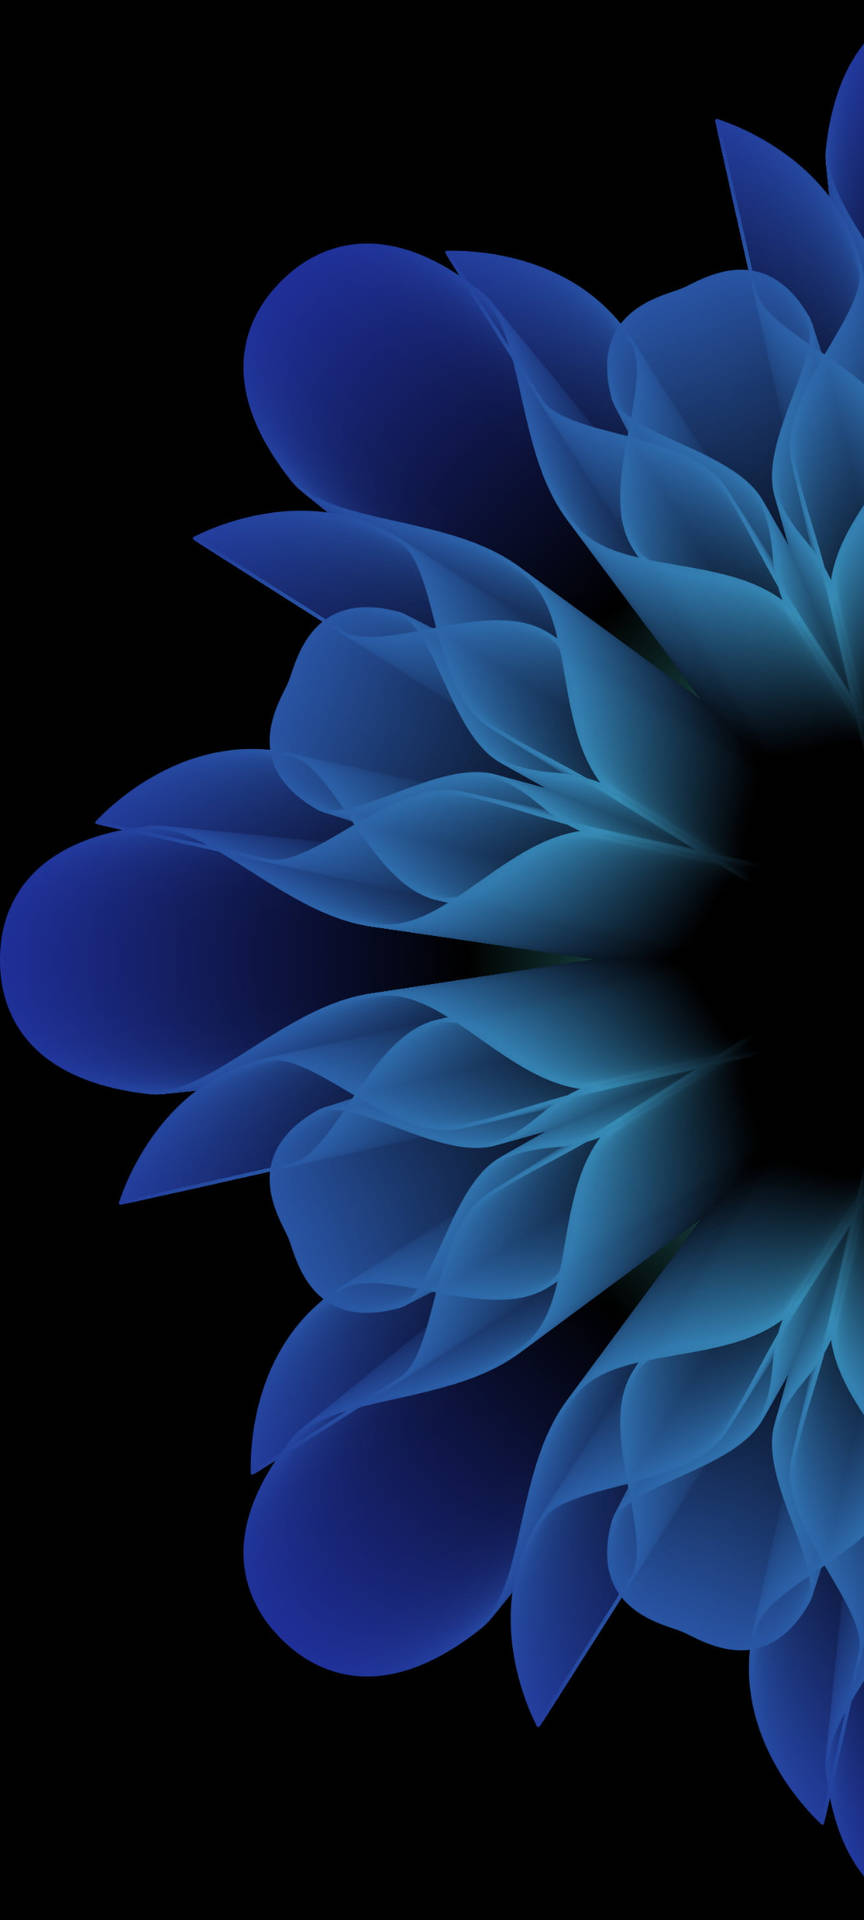 Opaque Blue Flower Original Iphone 7